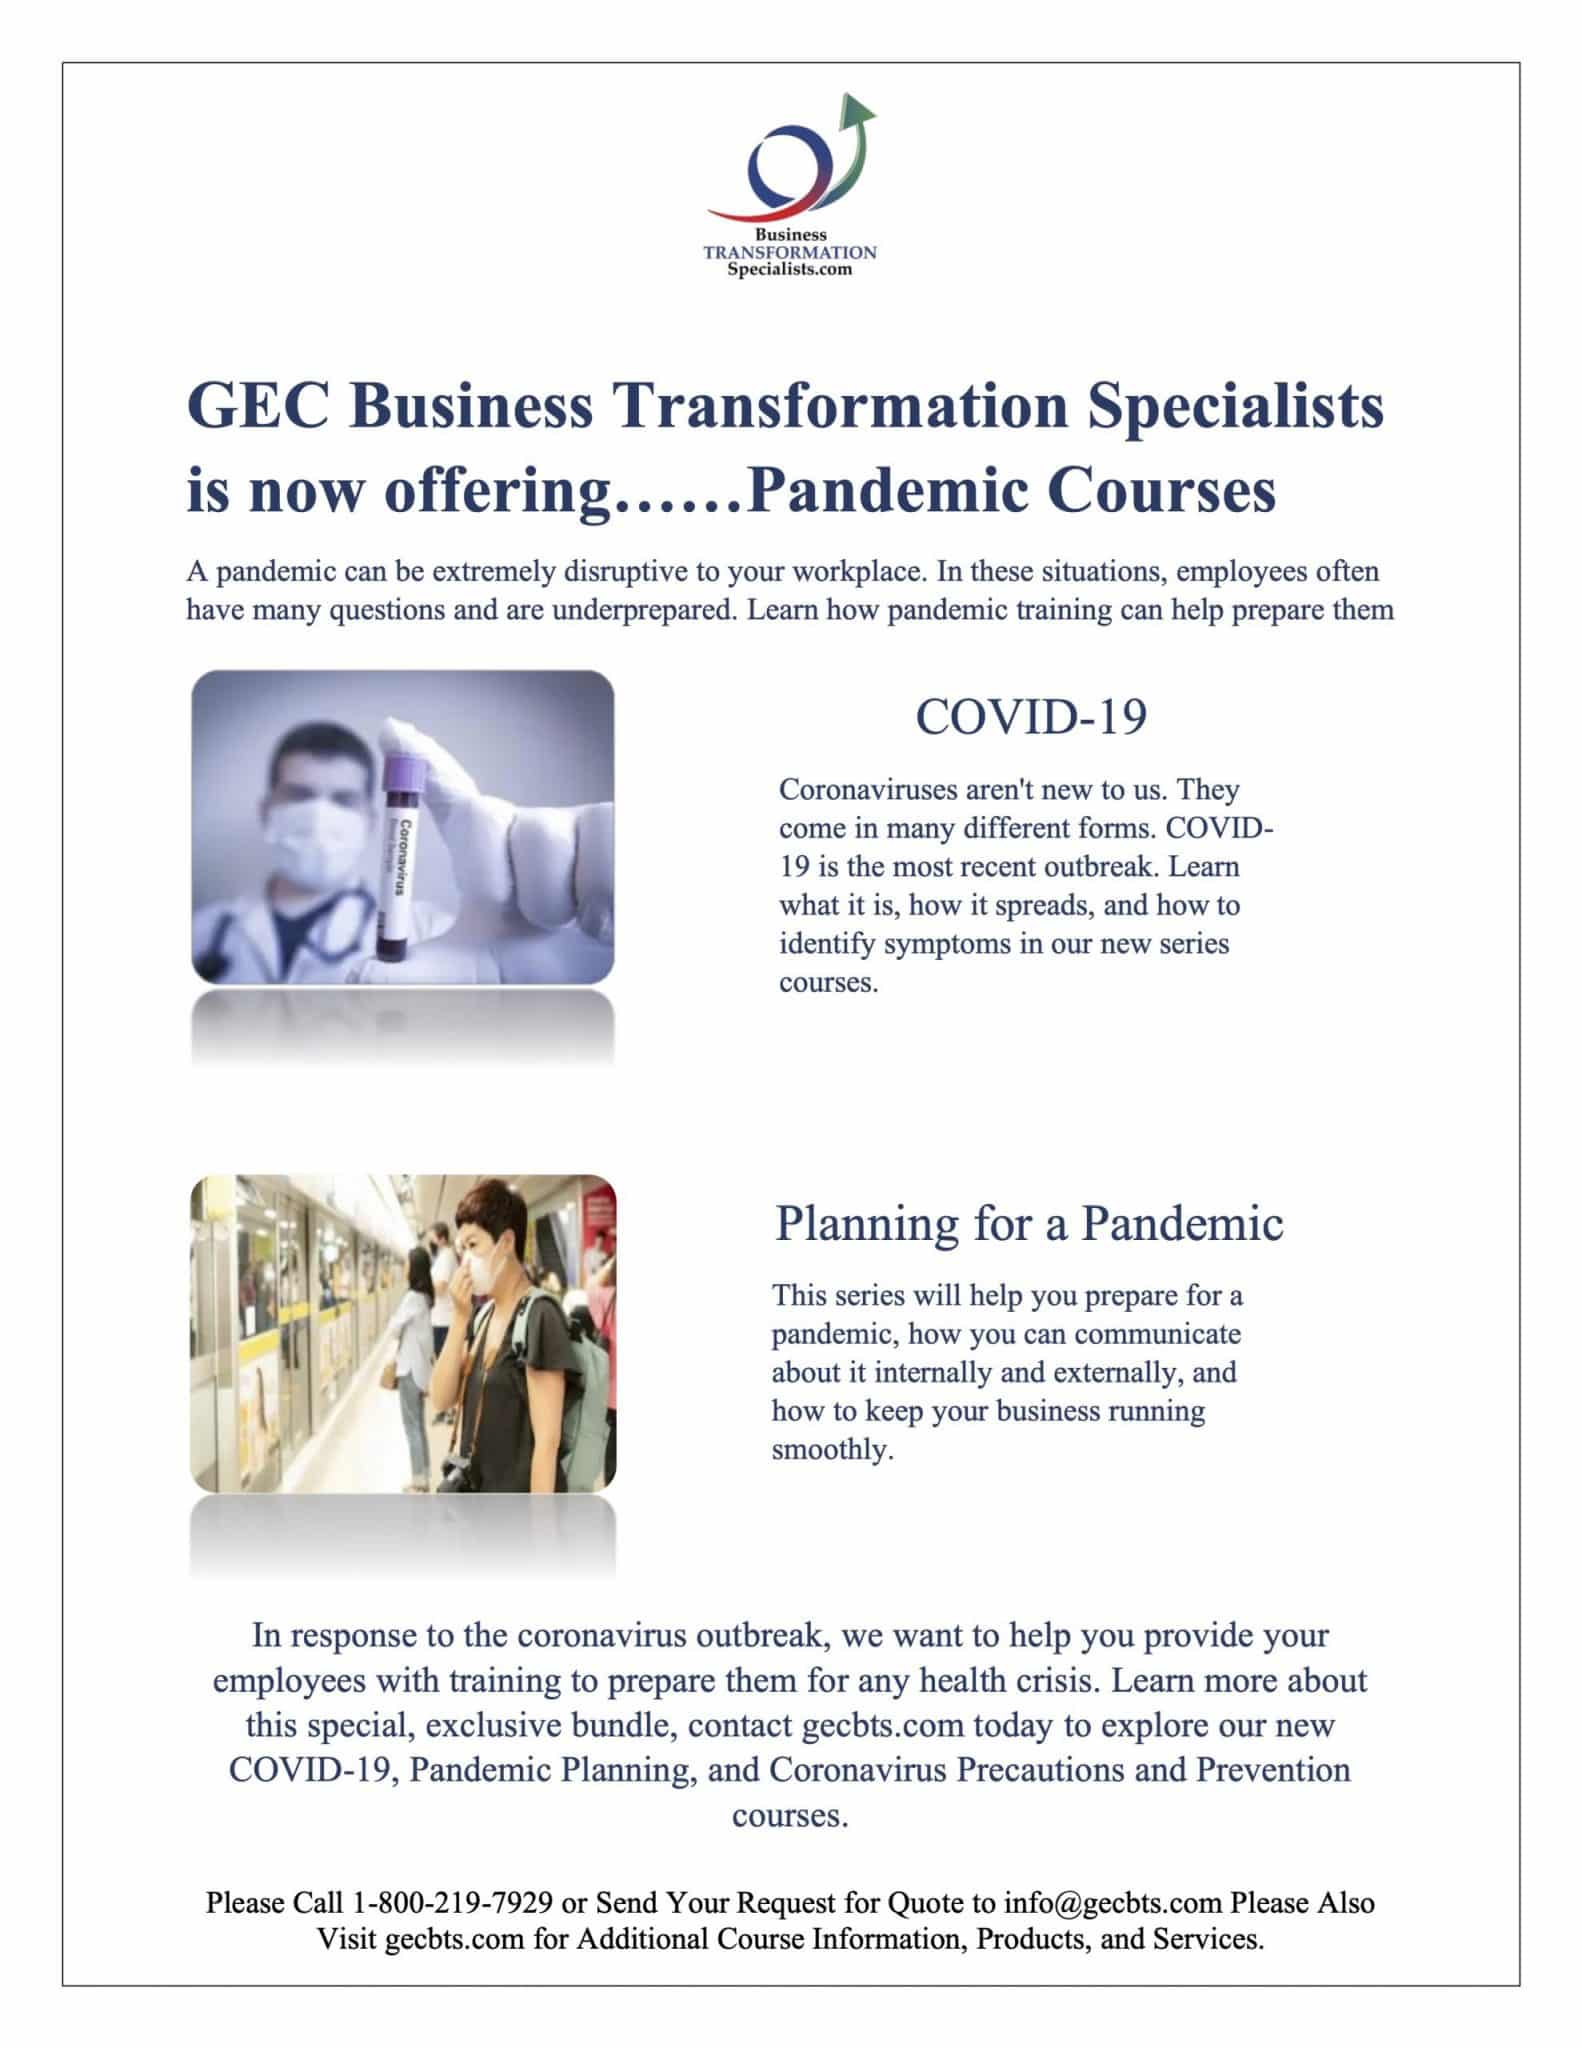 GECBTS Pandemic Coronavirus Courses 03.04.20 Cover Image scaled